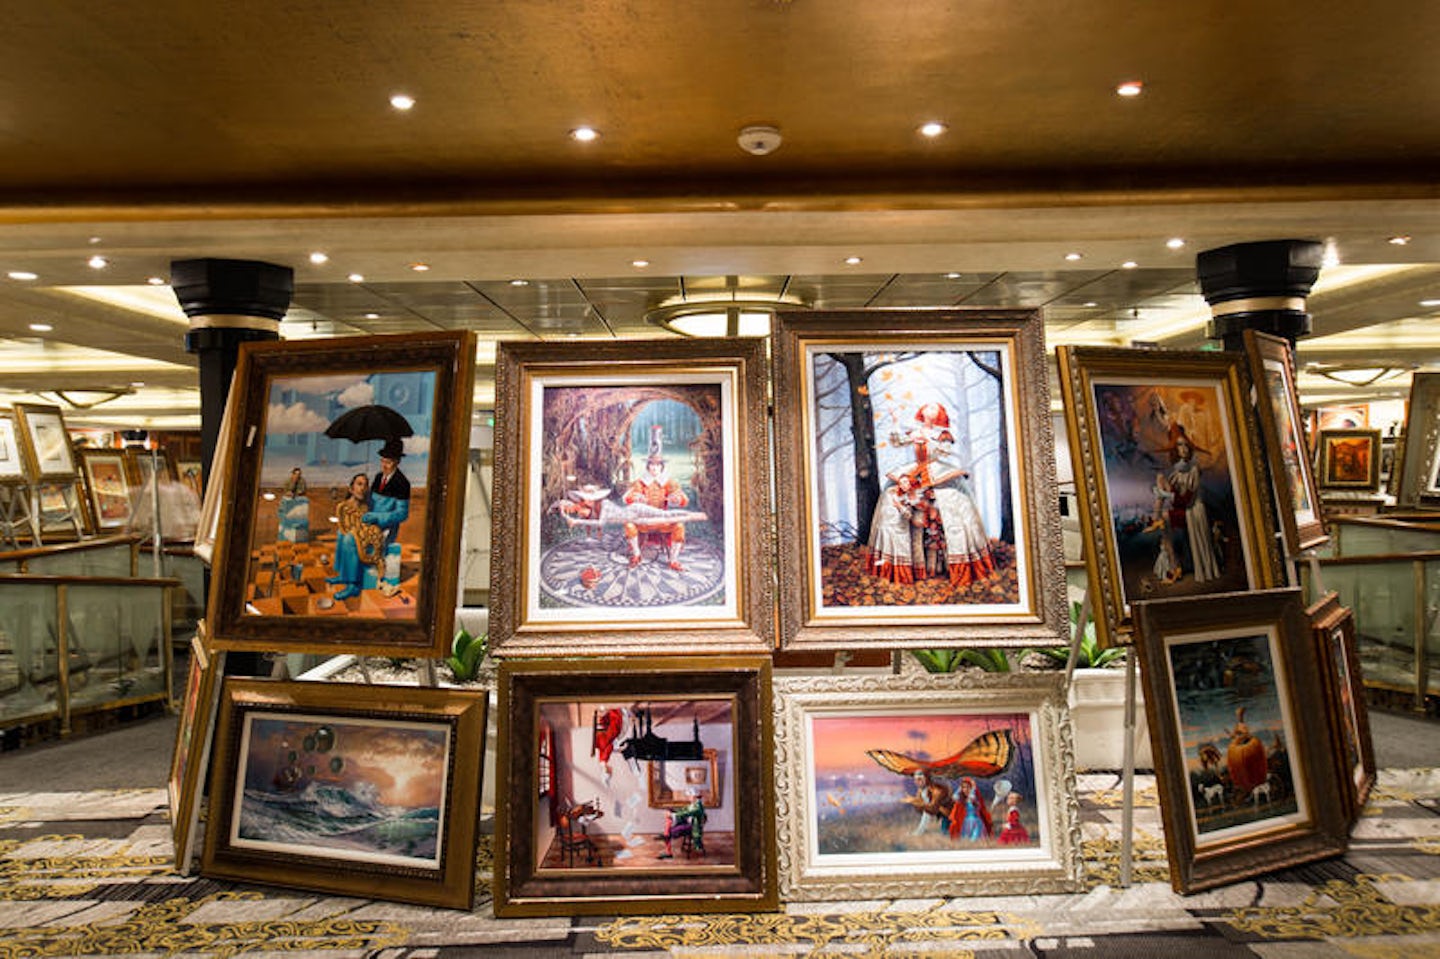 Art Auction on Explorer of the Seas